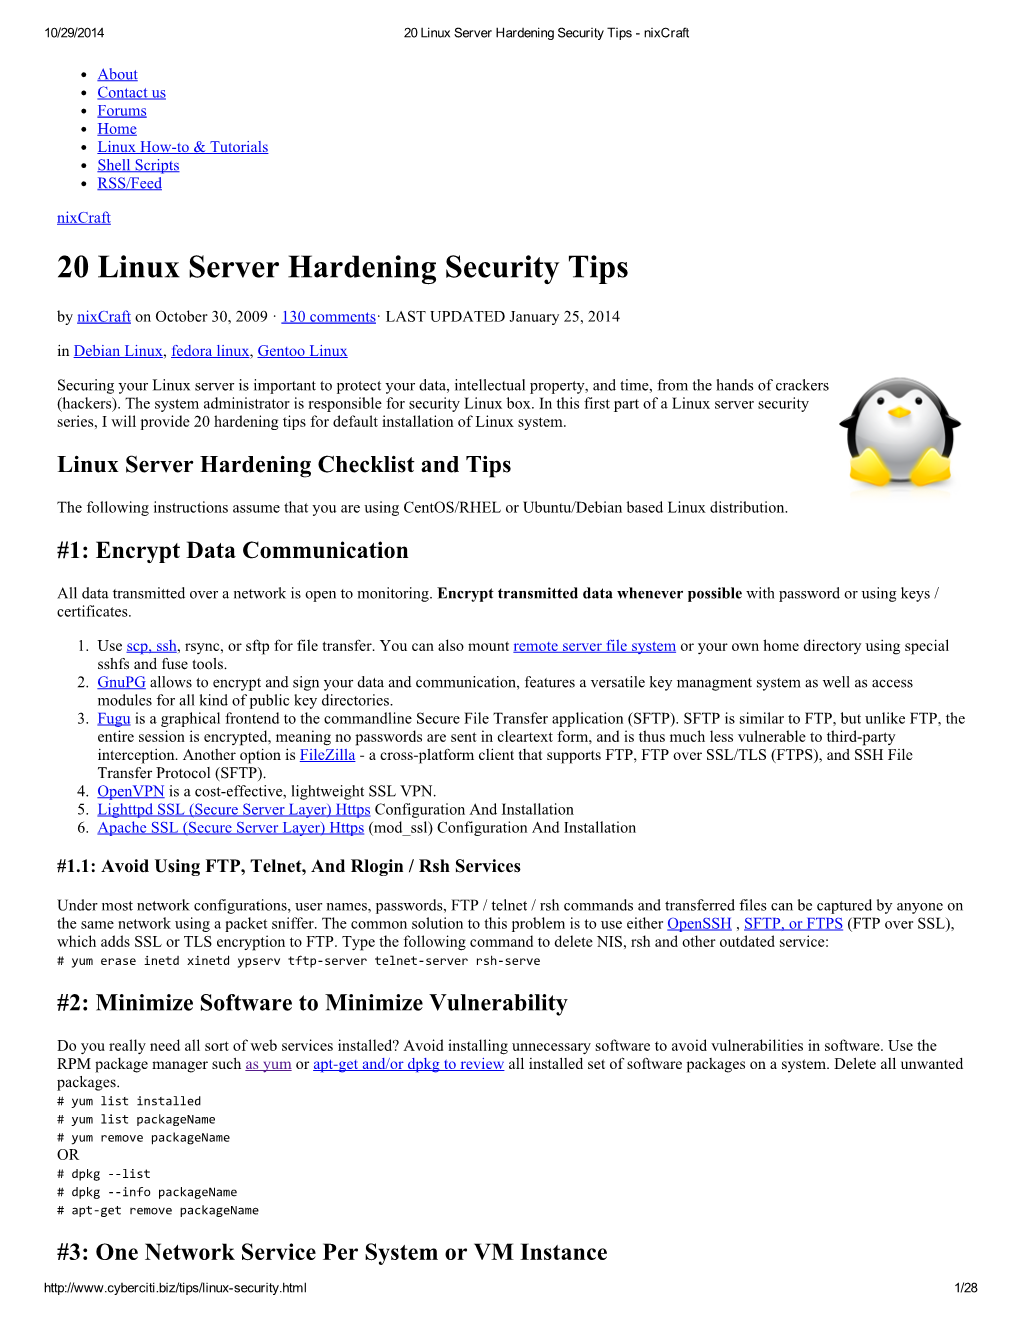 20 Linux Server Hardening Security Tips - Nixcraft